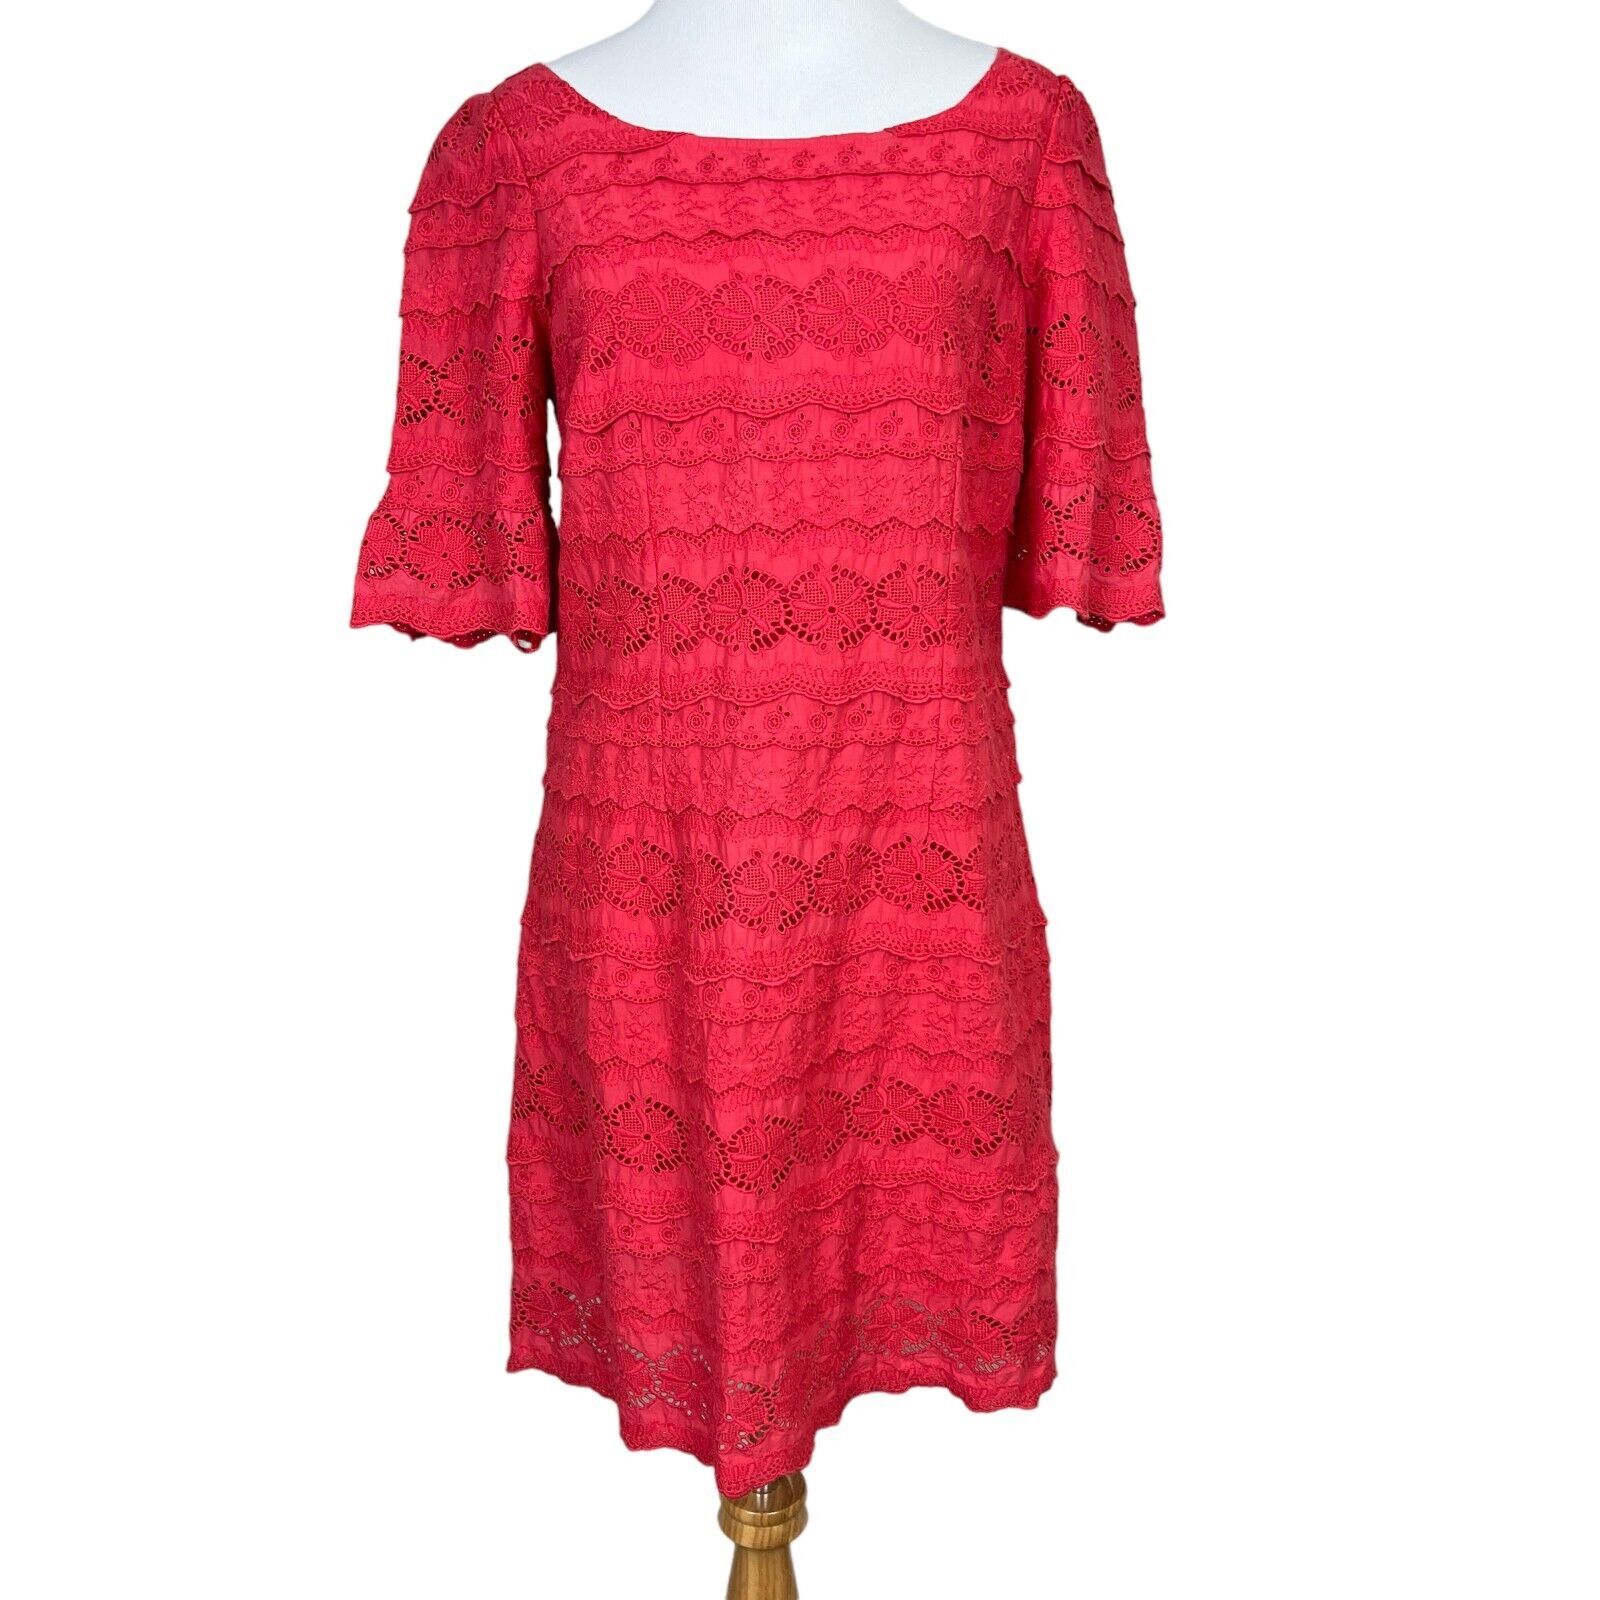 Primary image for Moulinette Soeurs Dress 4 Pink Eyelet Floral Lace Sheath Short Sleeve Mini Women